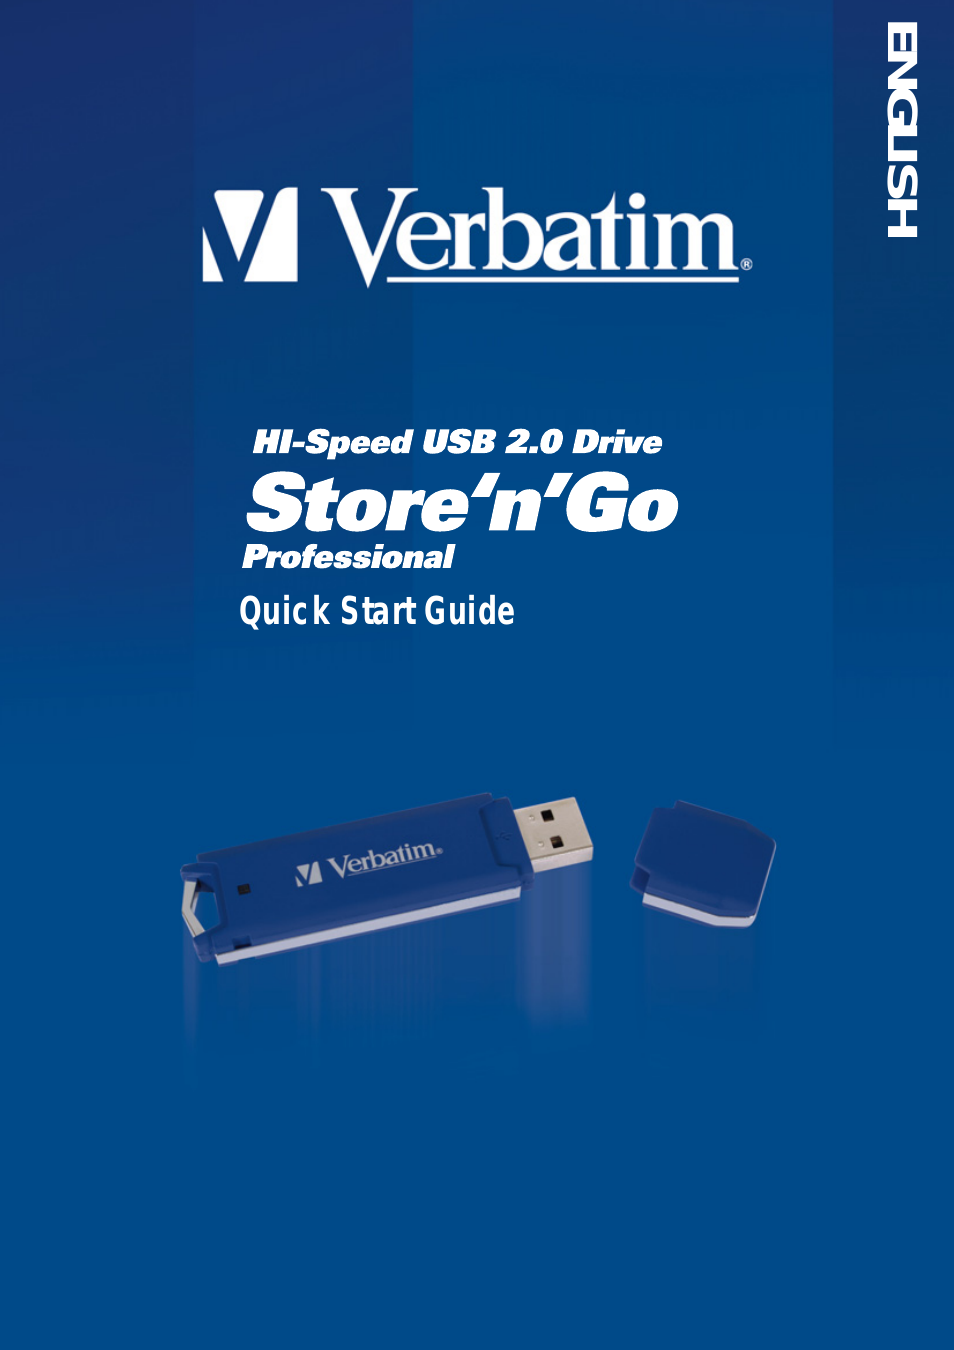 Store 'n' Go Hi-Speed USB